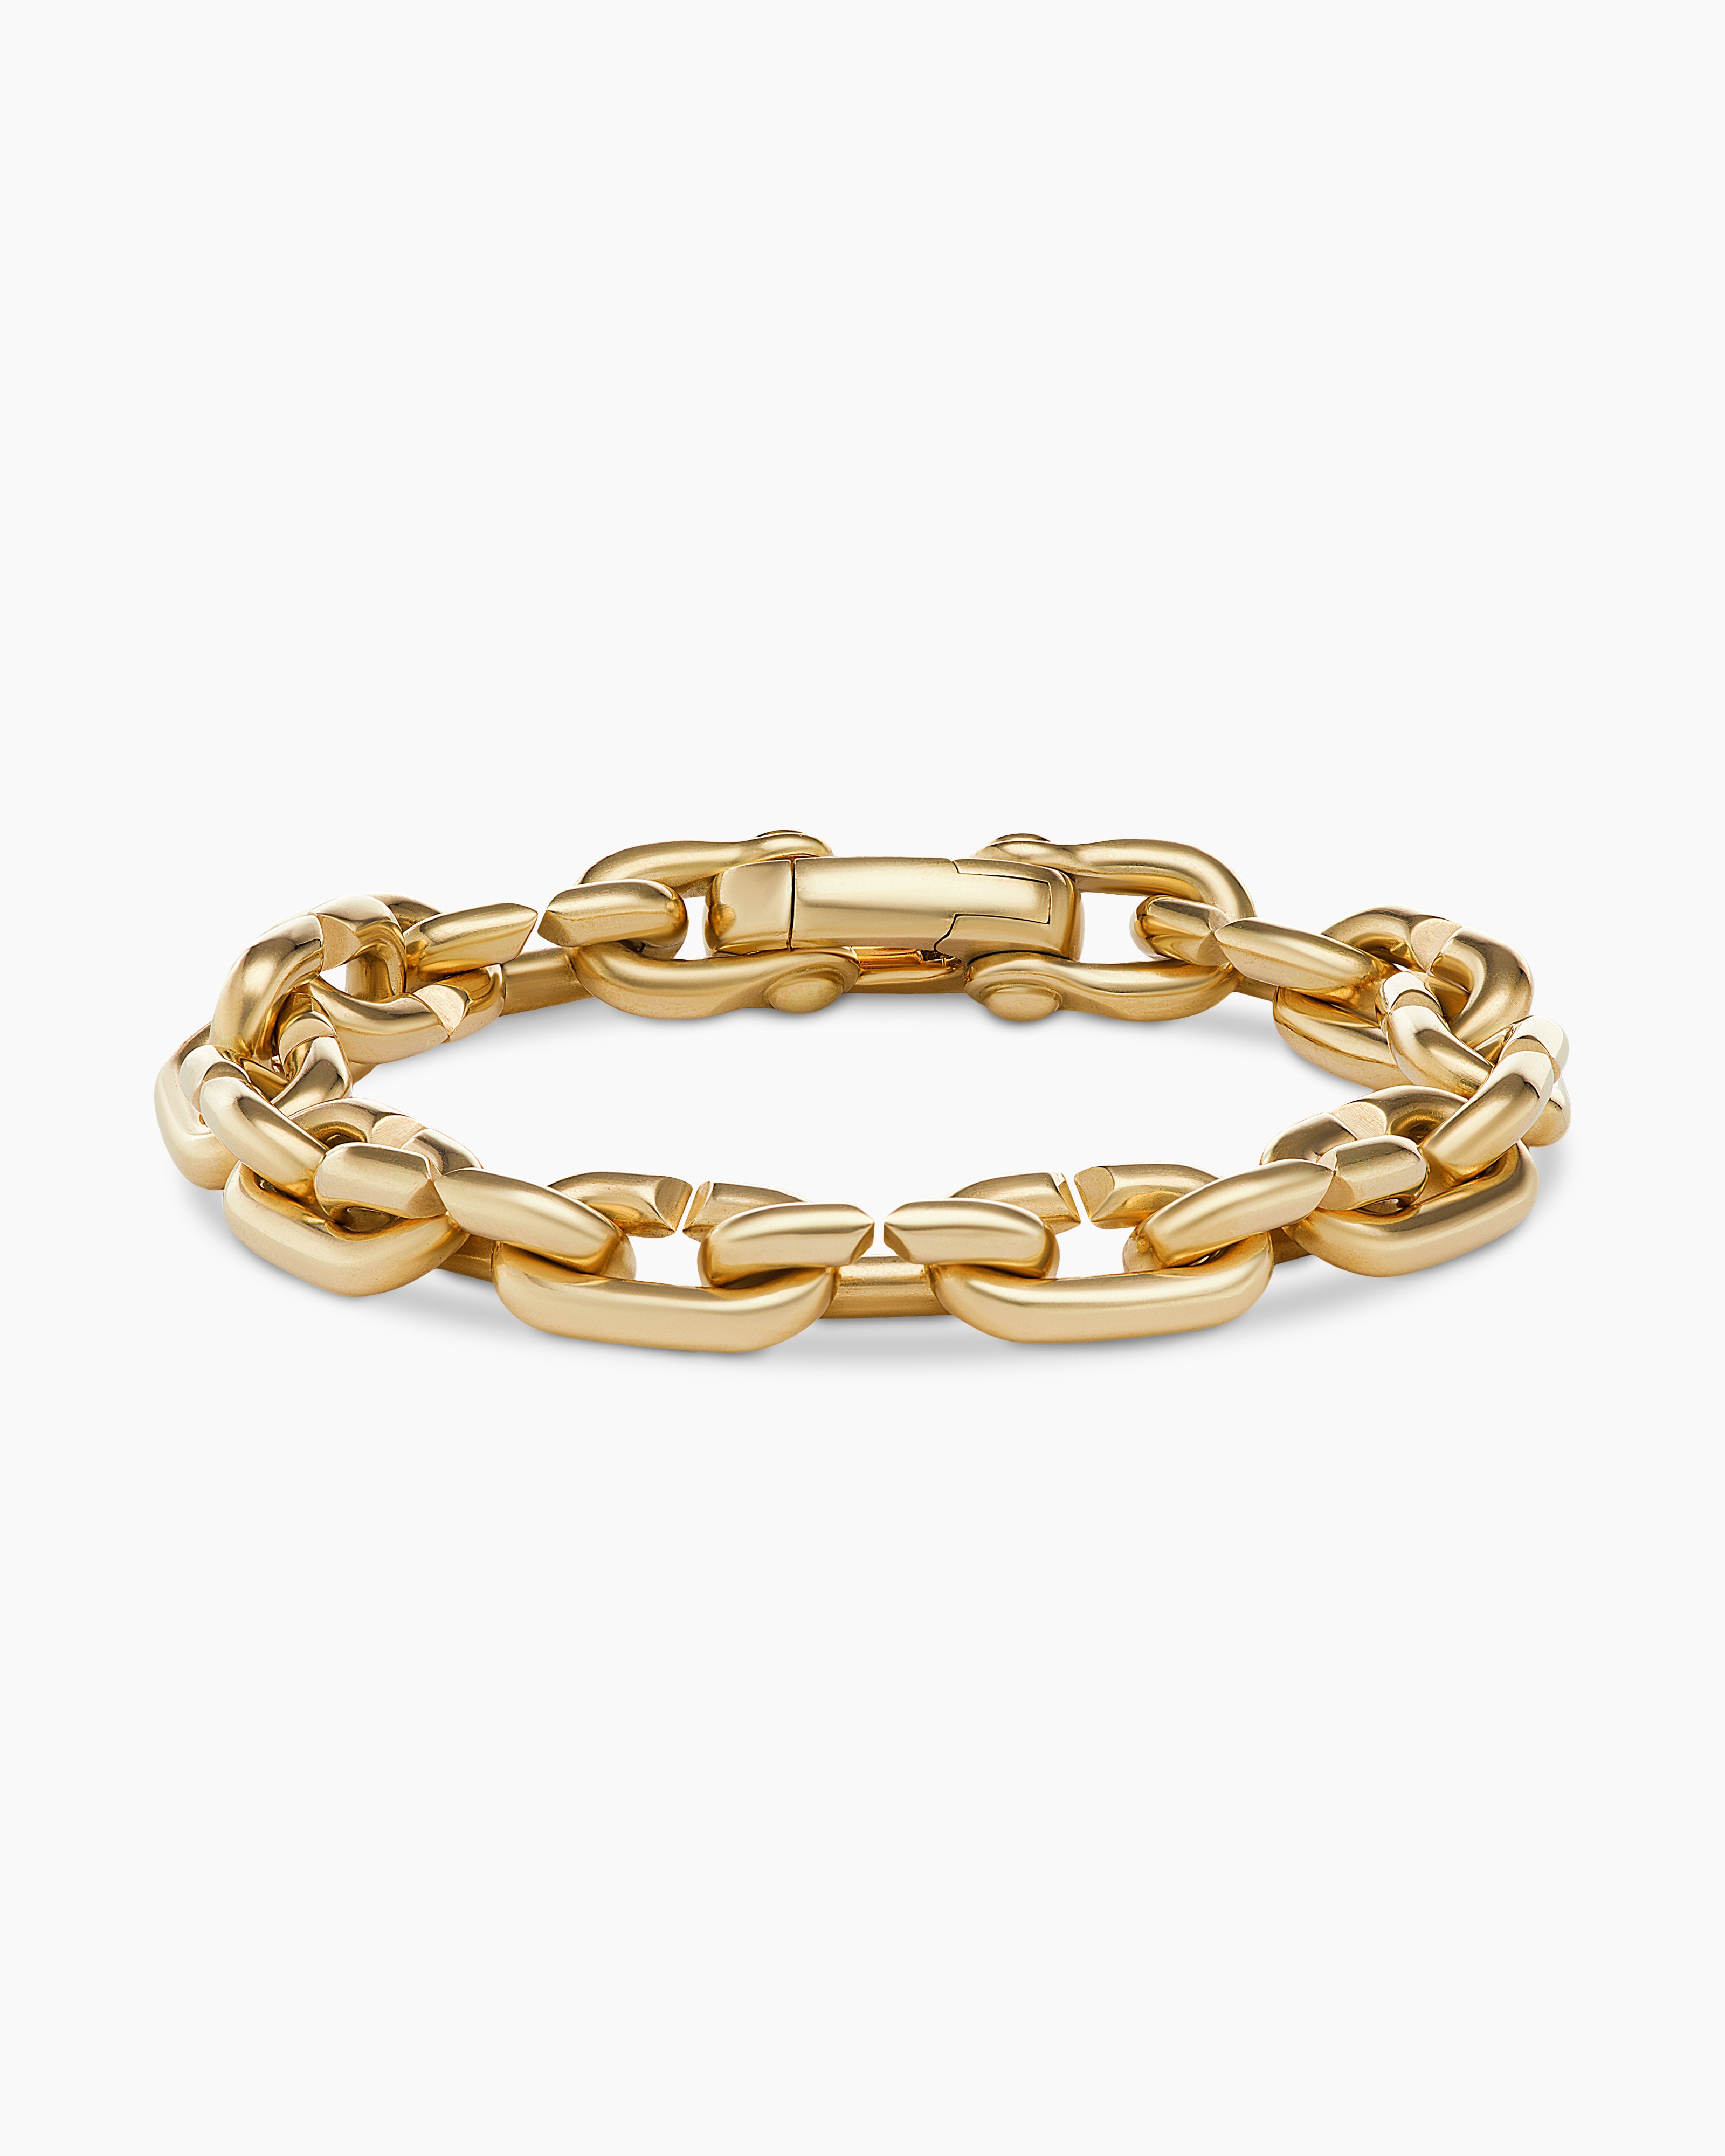 Chain Links Bracelet in 18K Yellow Gold, 10.3mm